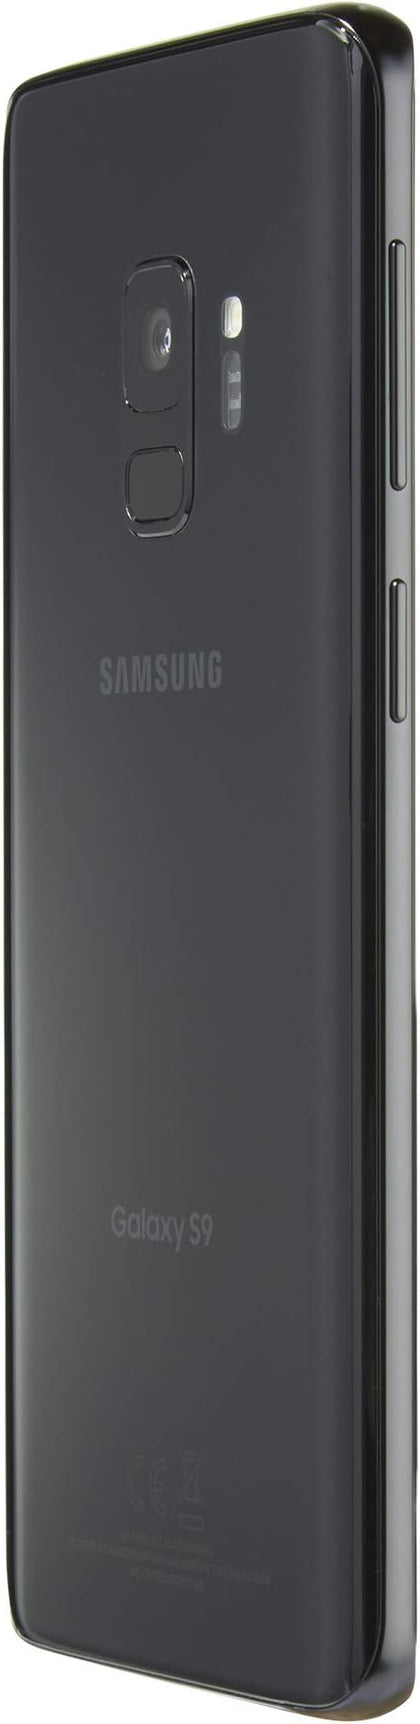 Galaxy S9 SM-G960U 64GB Midnight Black Grade C